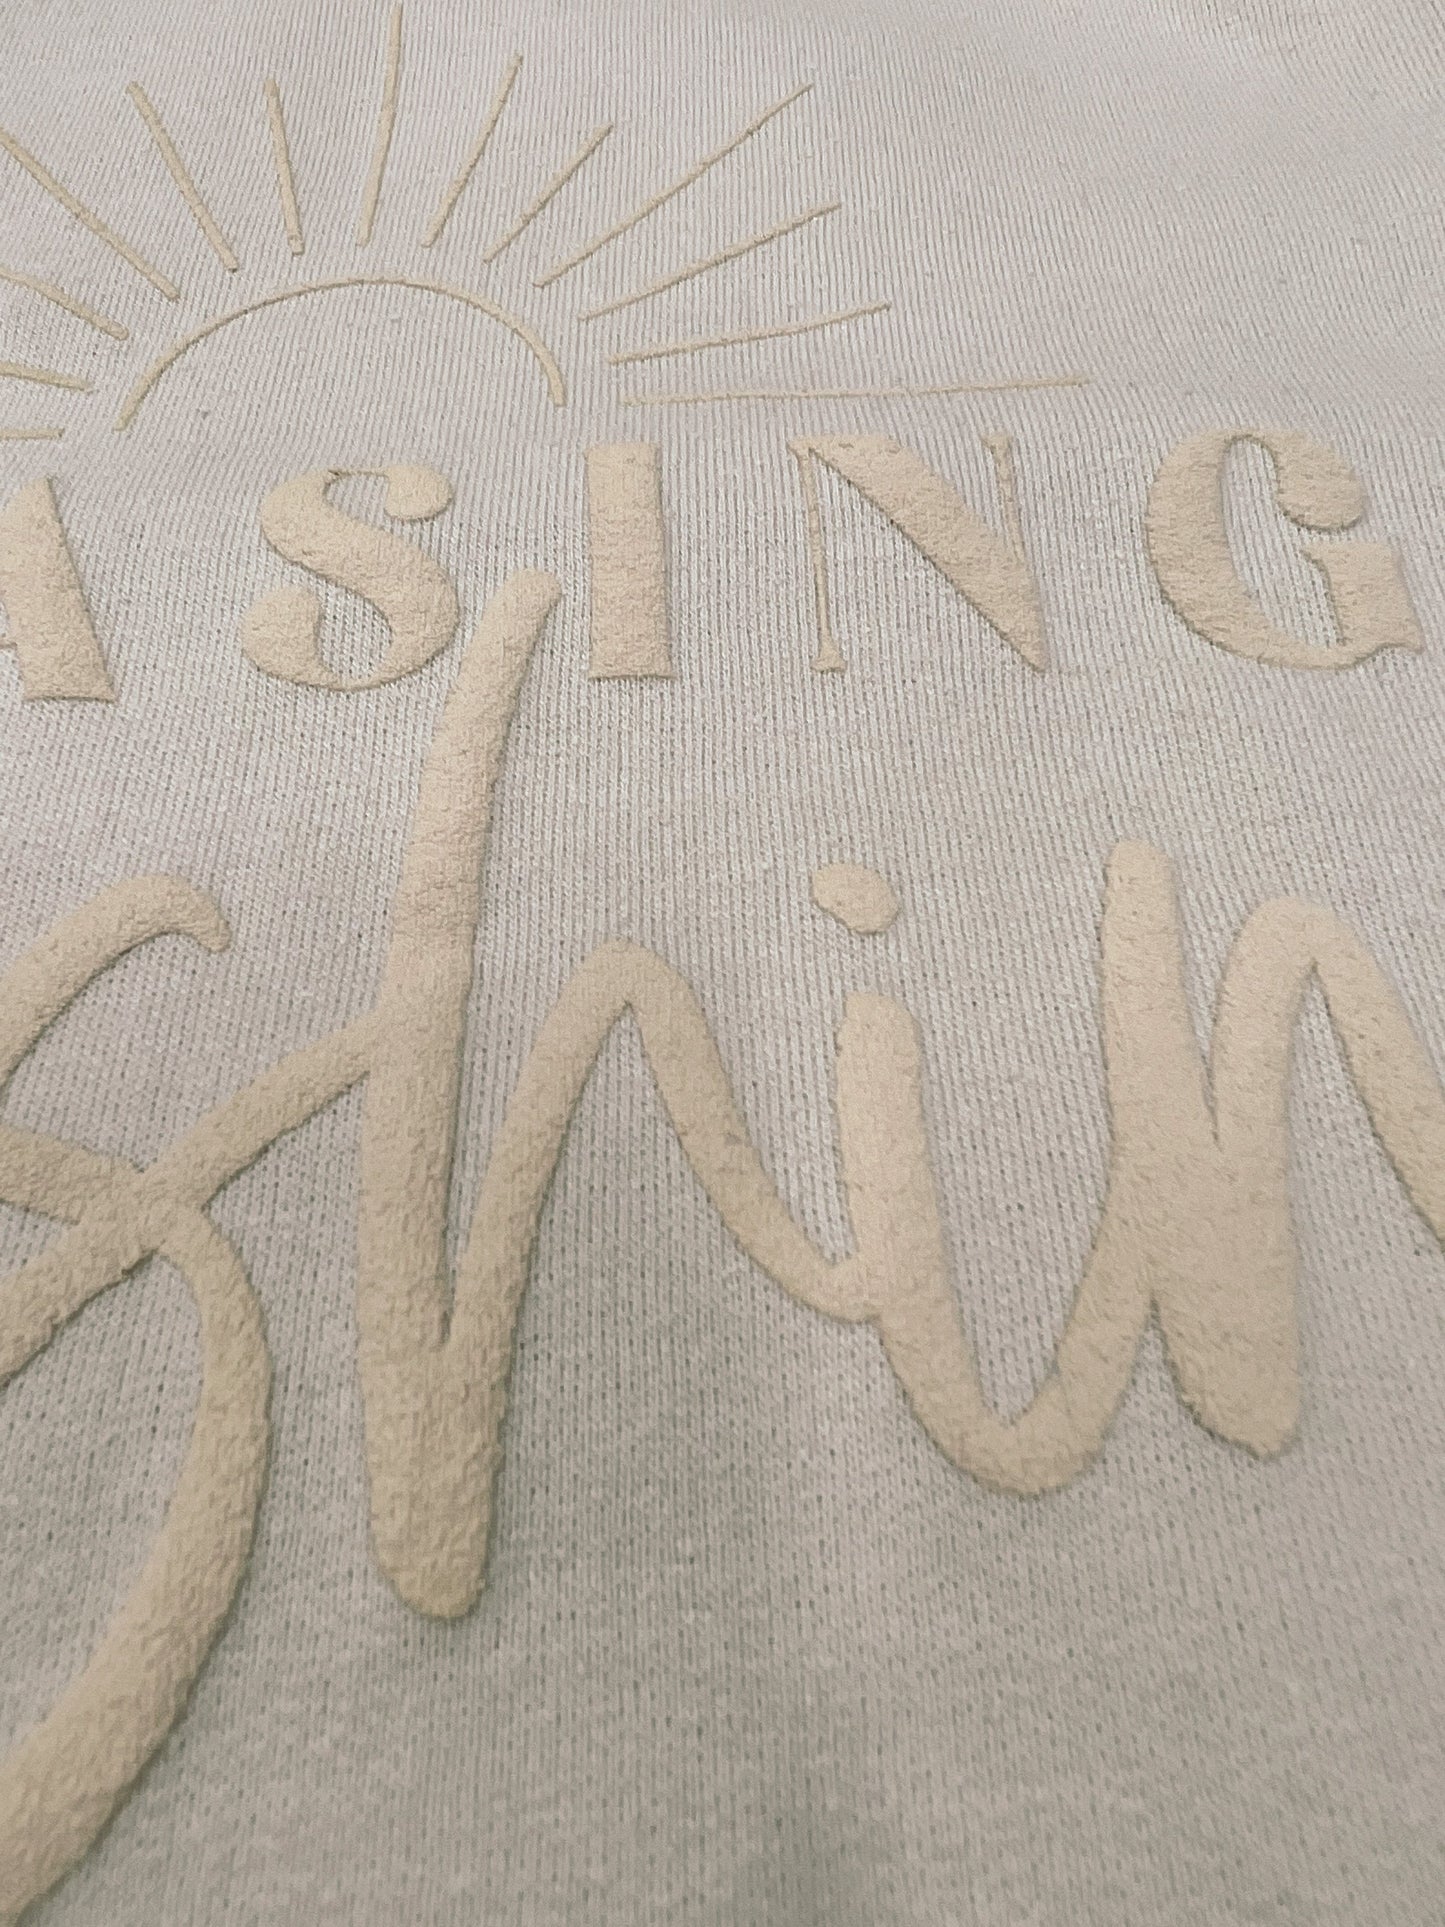 Chasing Sunshine (Tan Sweatshirt) Puff Ink